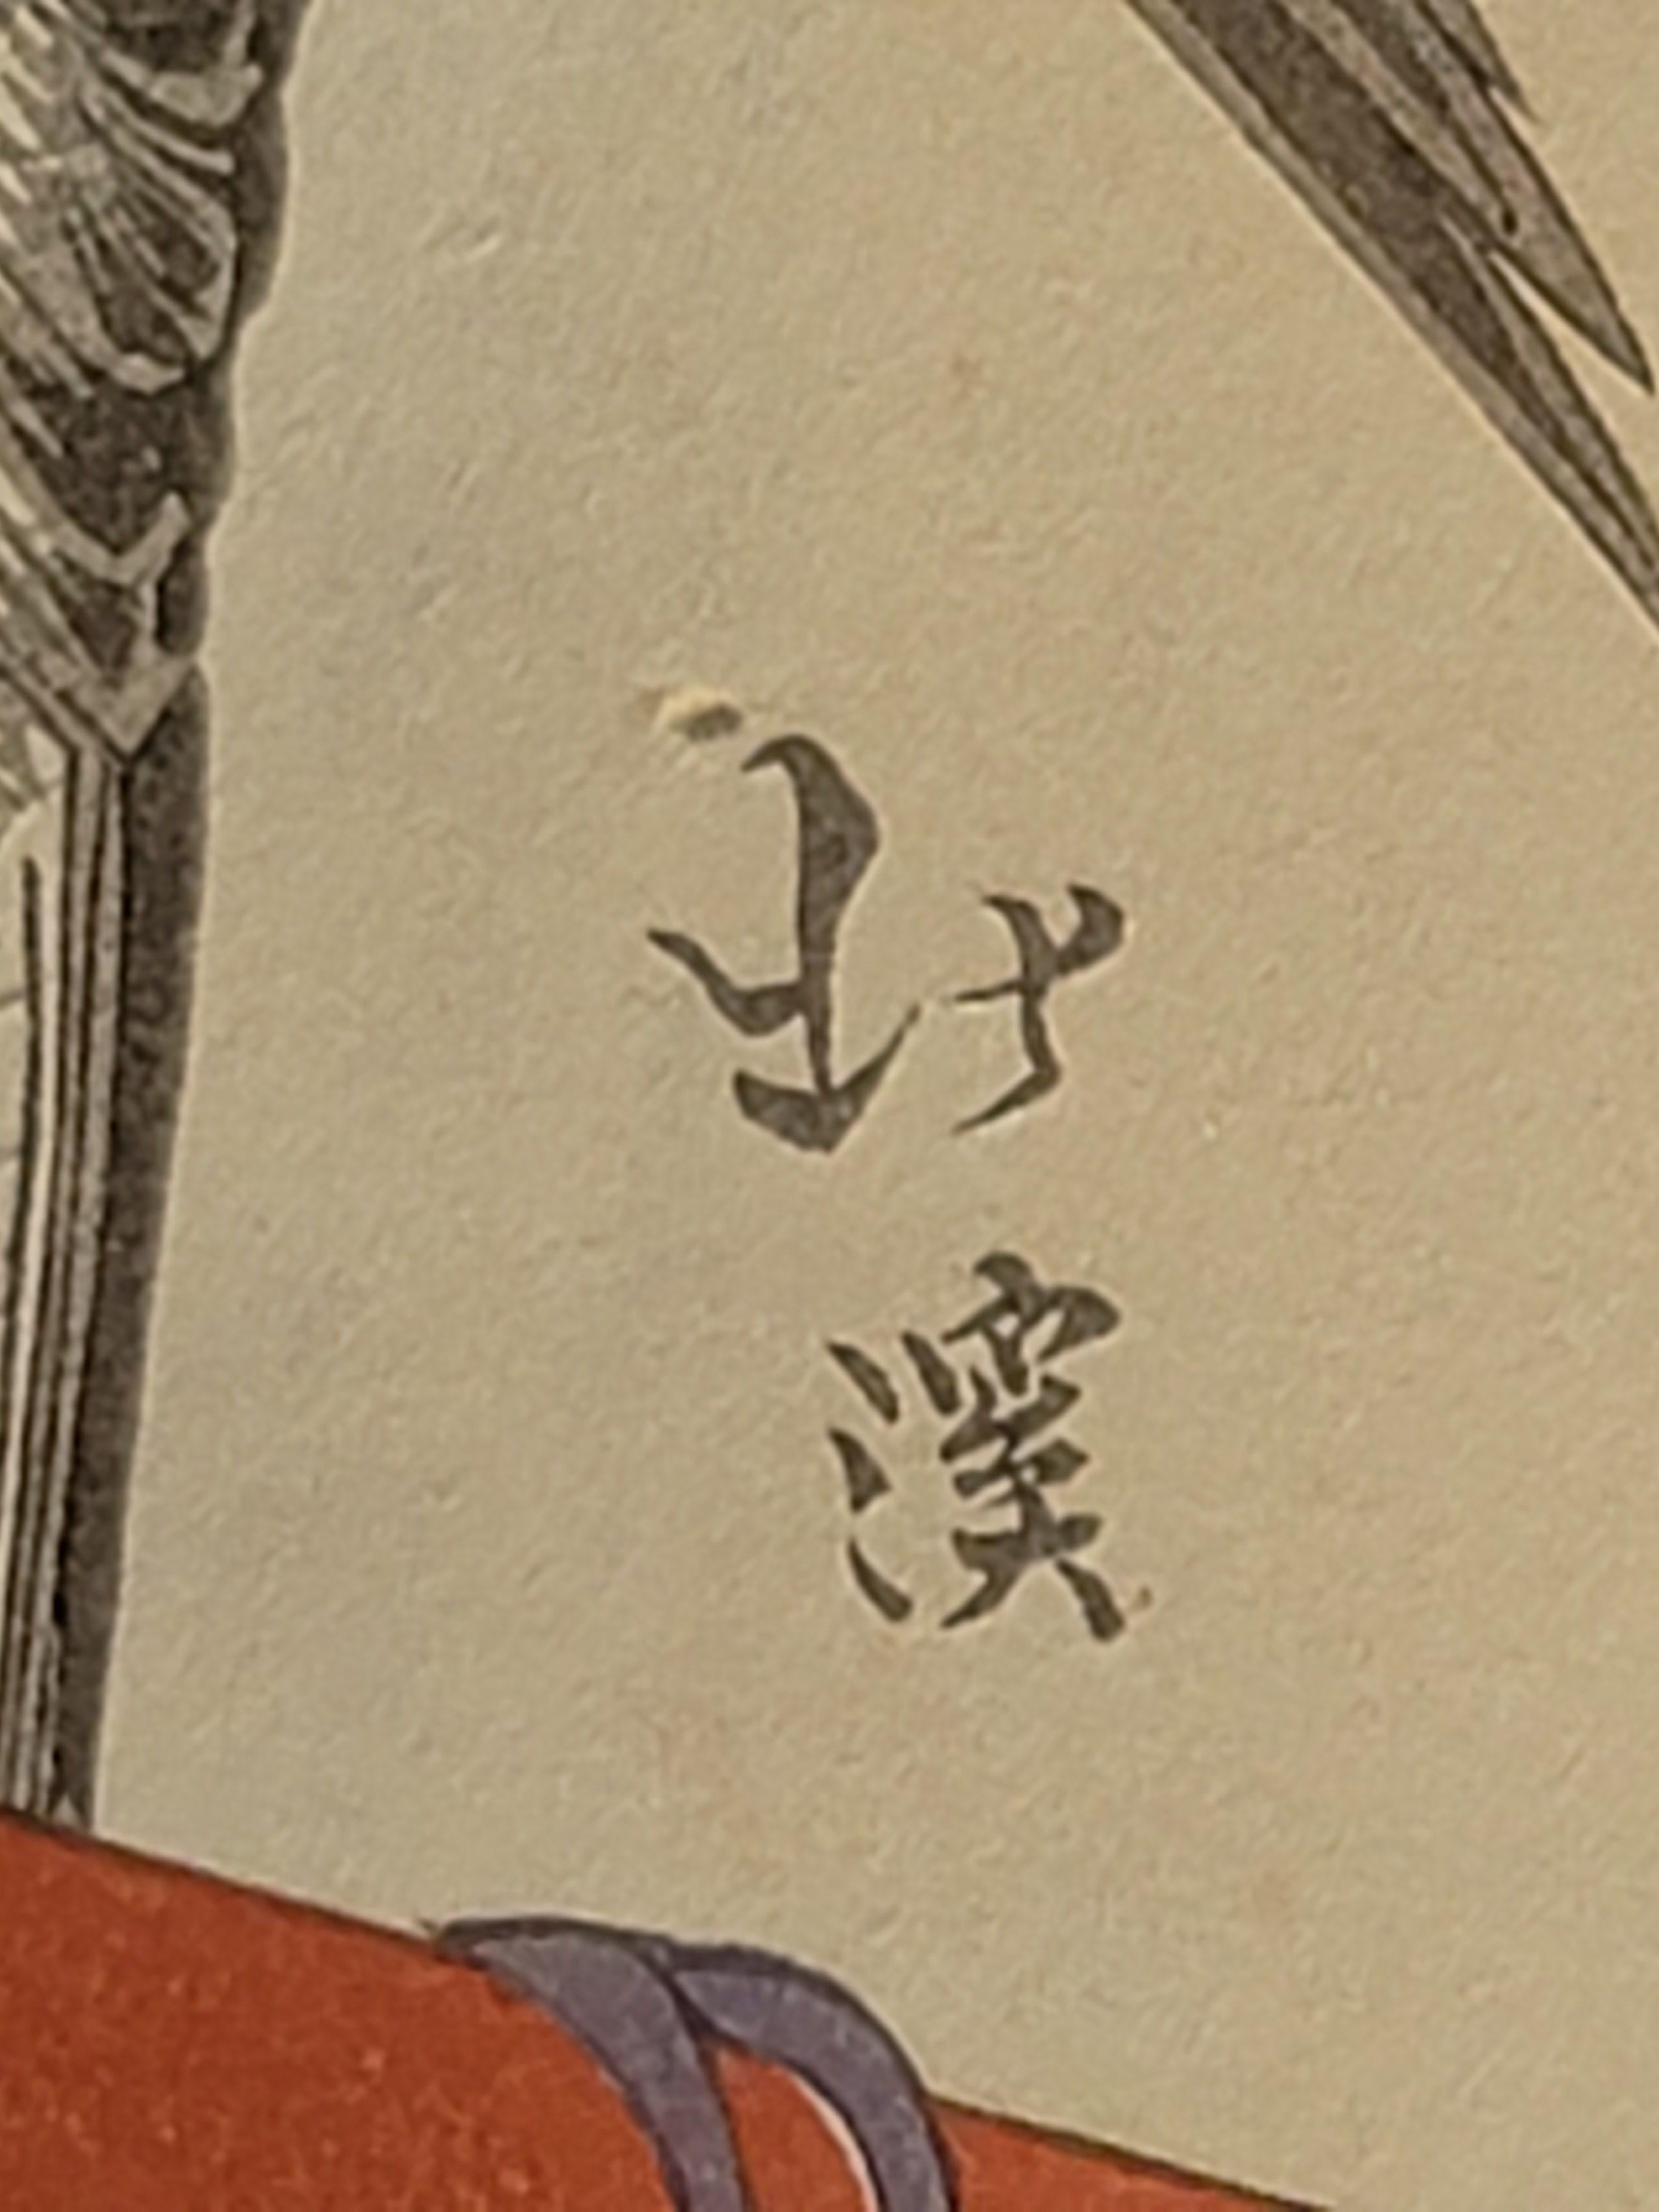 19th Century Japanese Woodblock Print by Totoya Hokkei 魚屋北溪 '1780-1850'